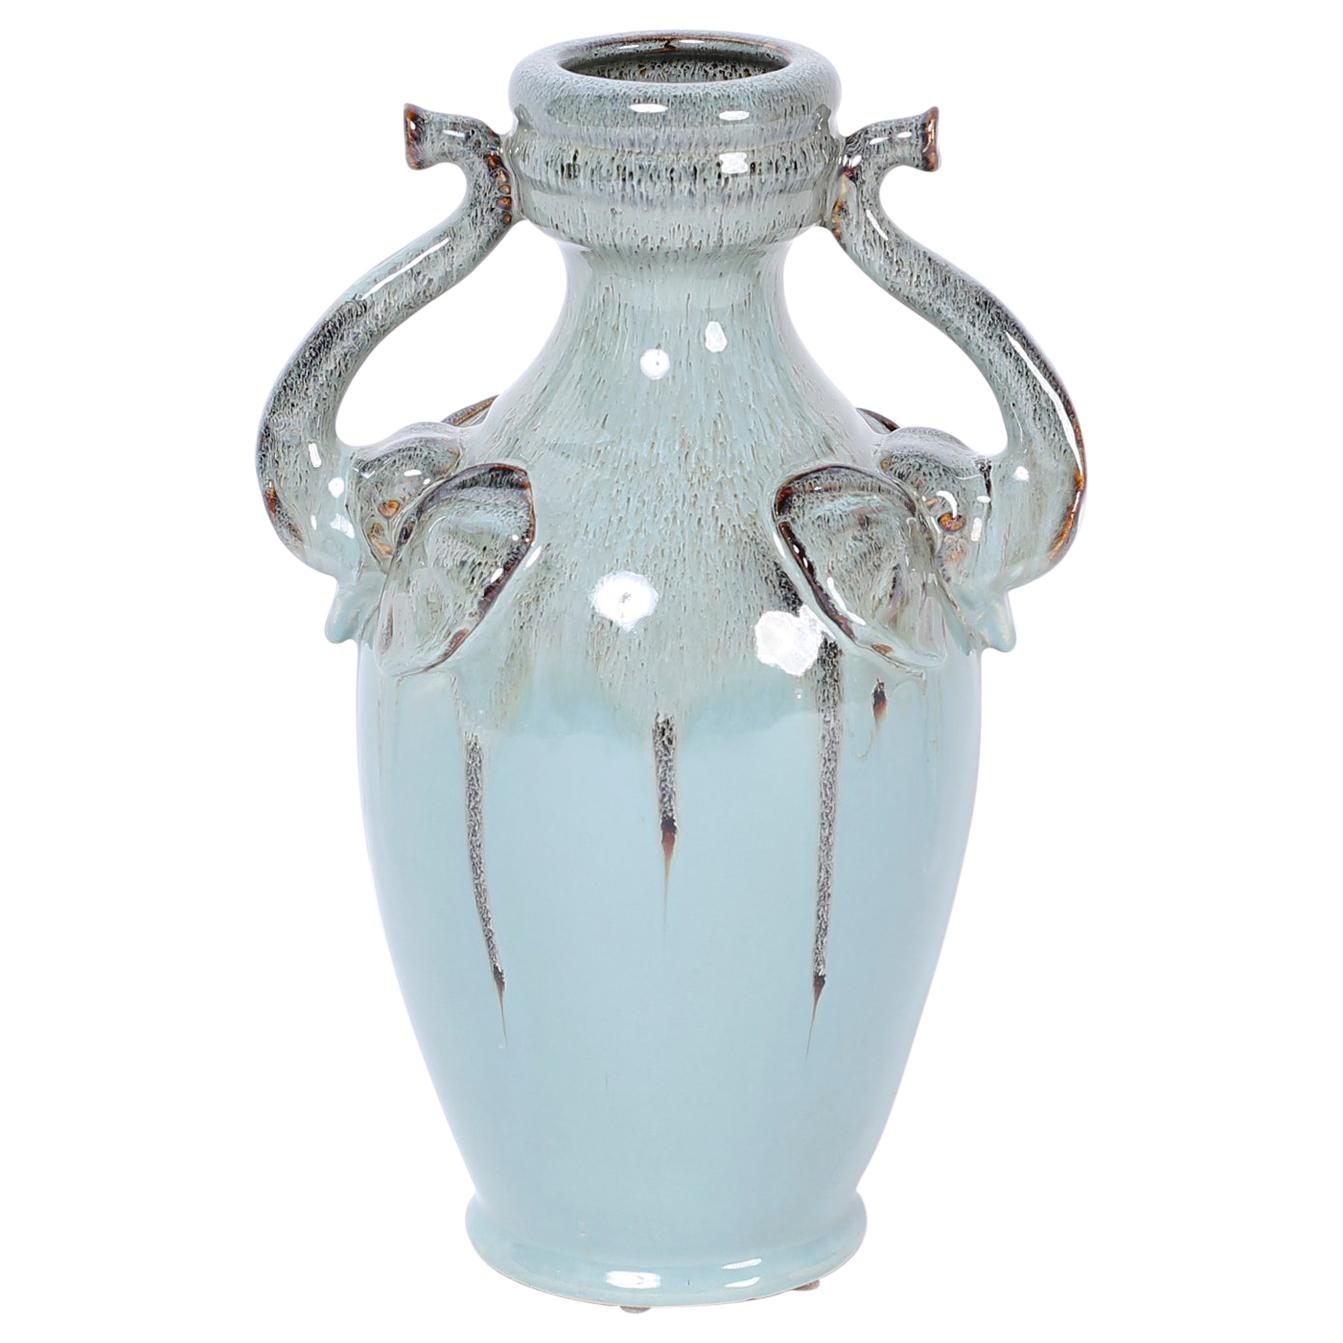 Midcentury Glazed Terracotta Vase with Elephant Handles